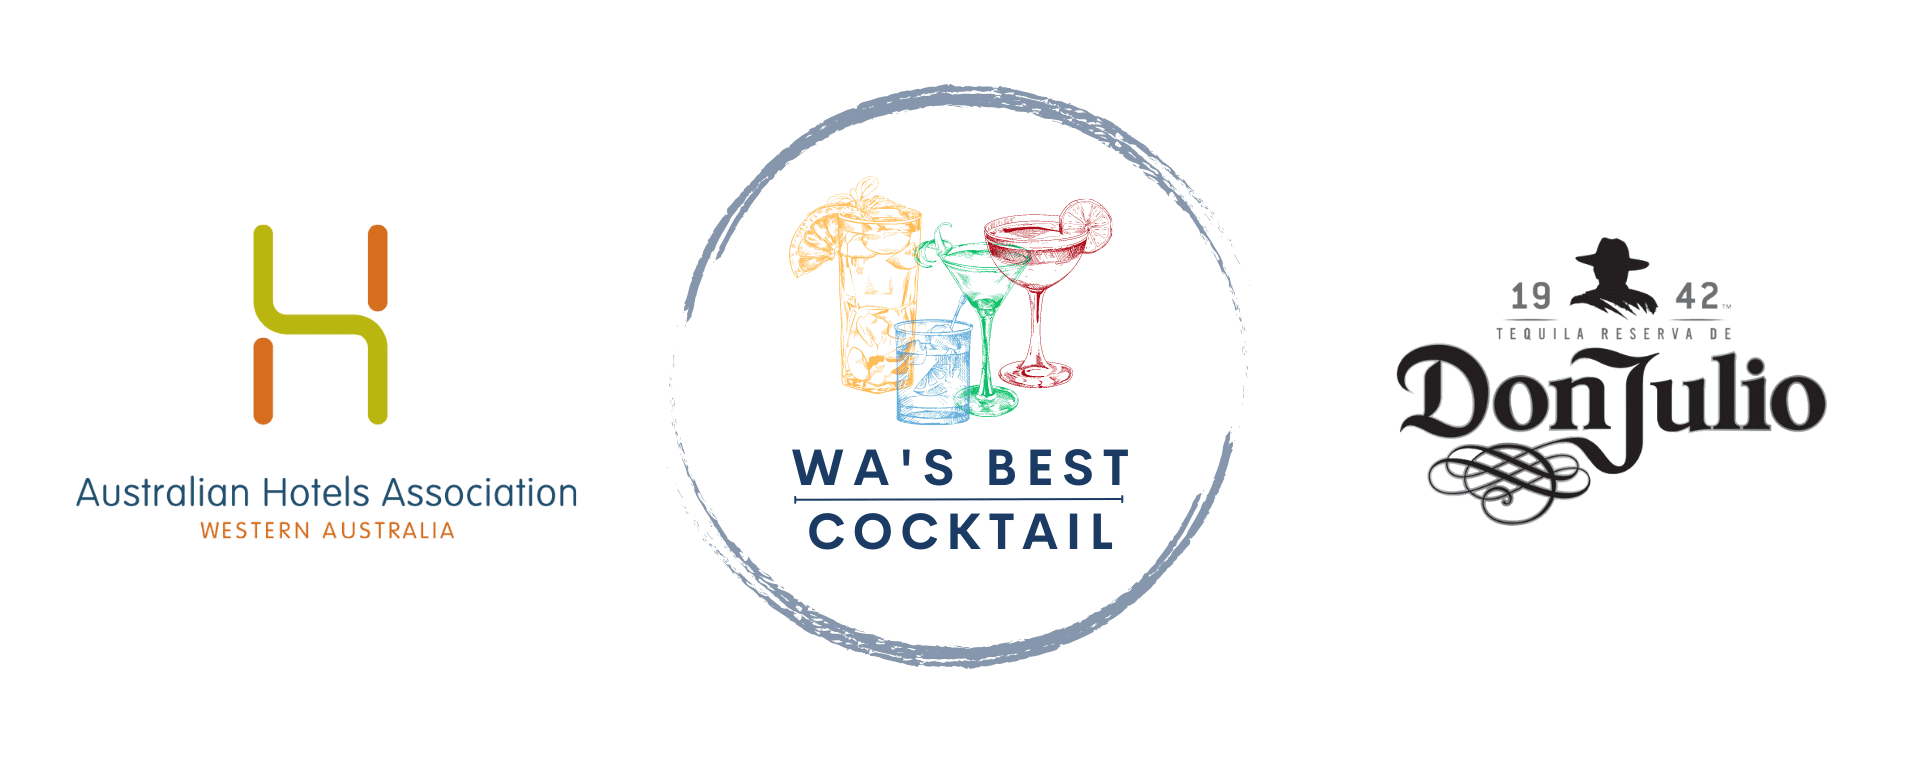 Copy of WA's Best Cocktail Logo v2 (1920 × 763 px)